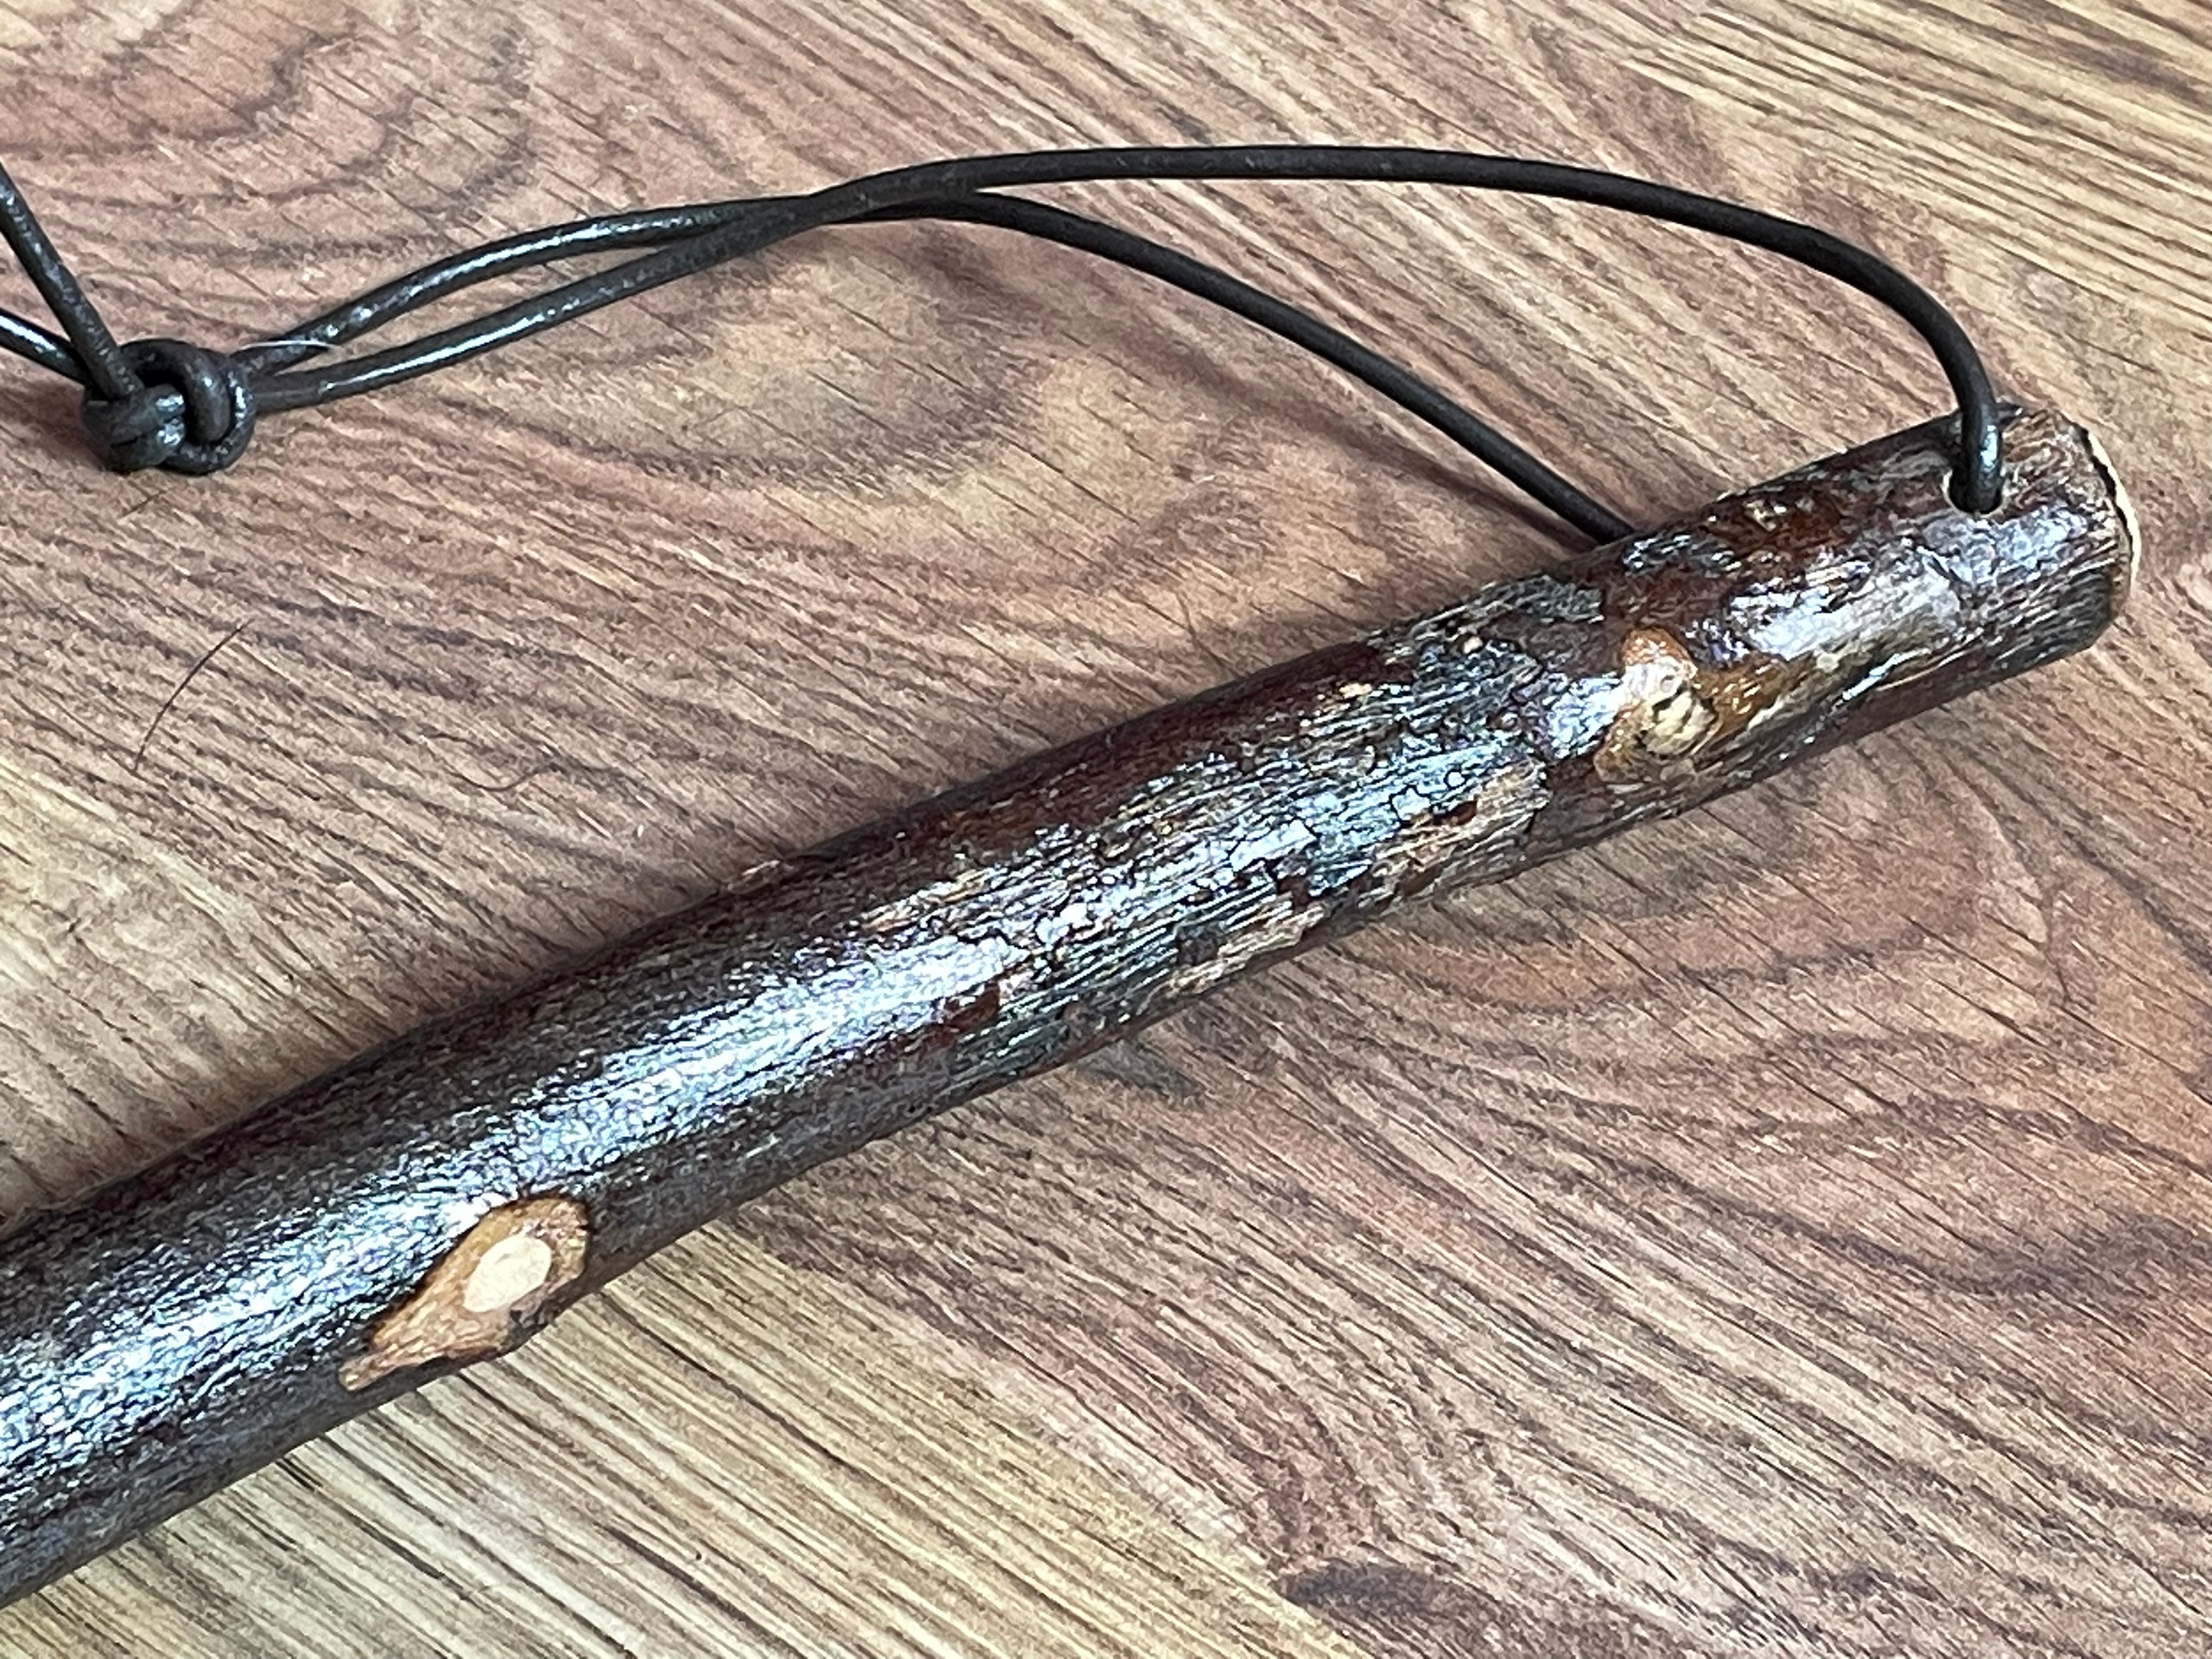 Blackthorn Shillelagh - 19 inch - Handmade in Ireland